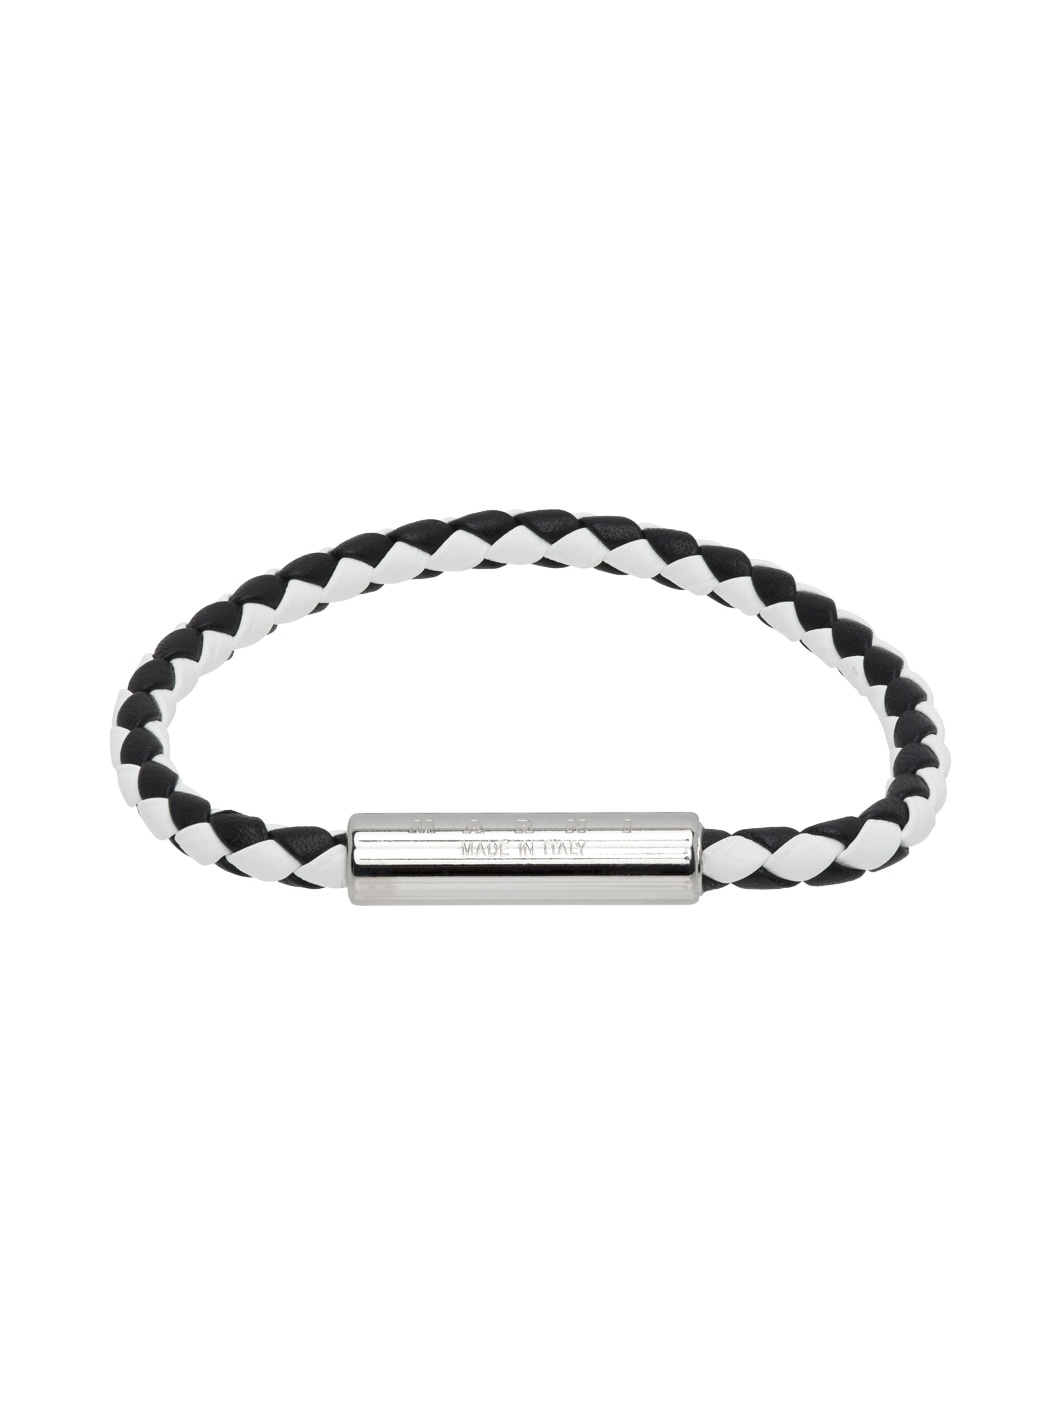 Black & White Braided Leather Bracelet - 1